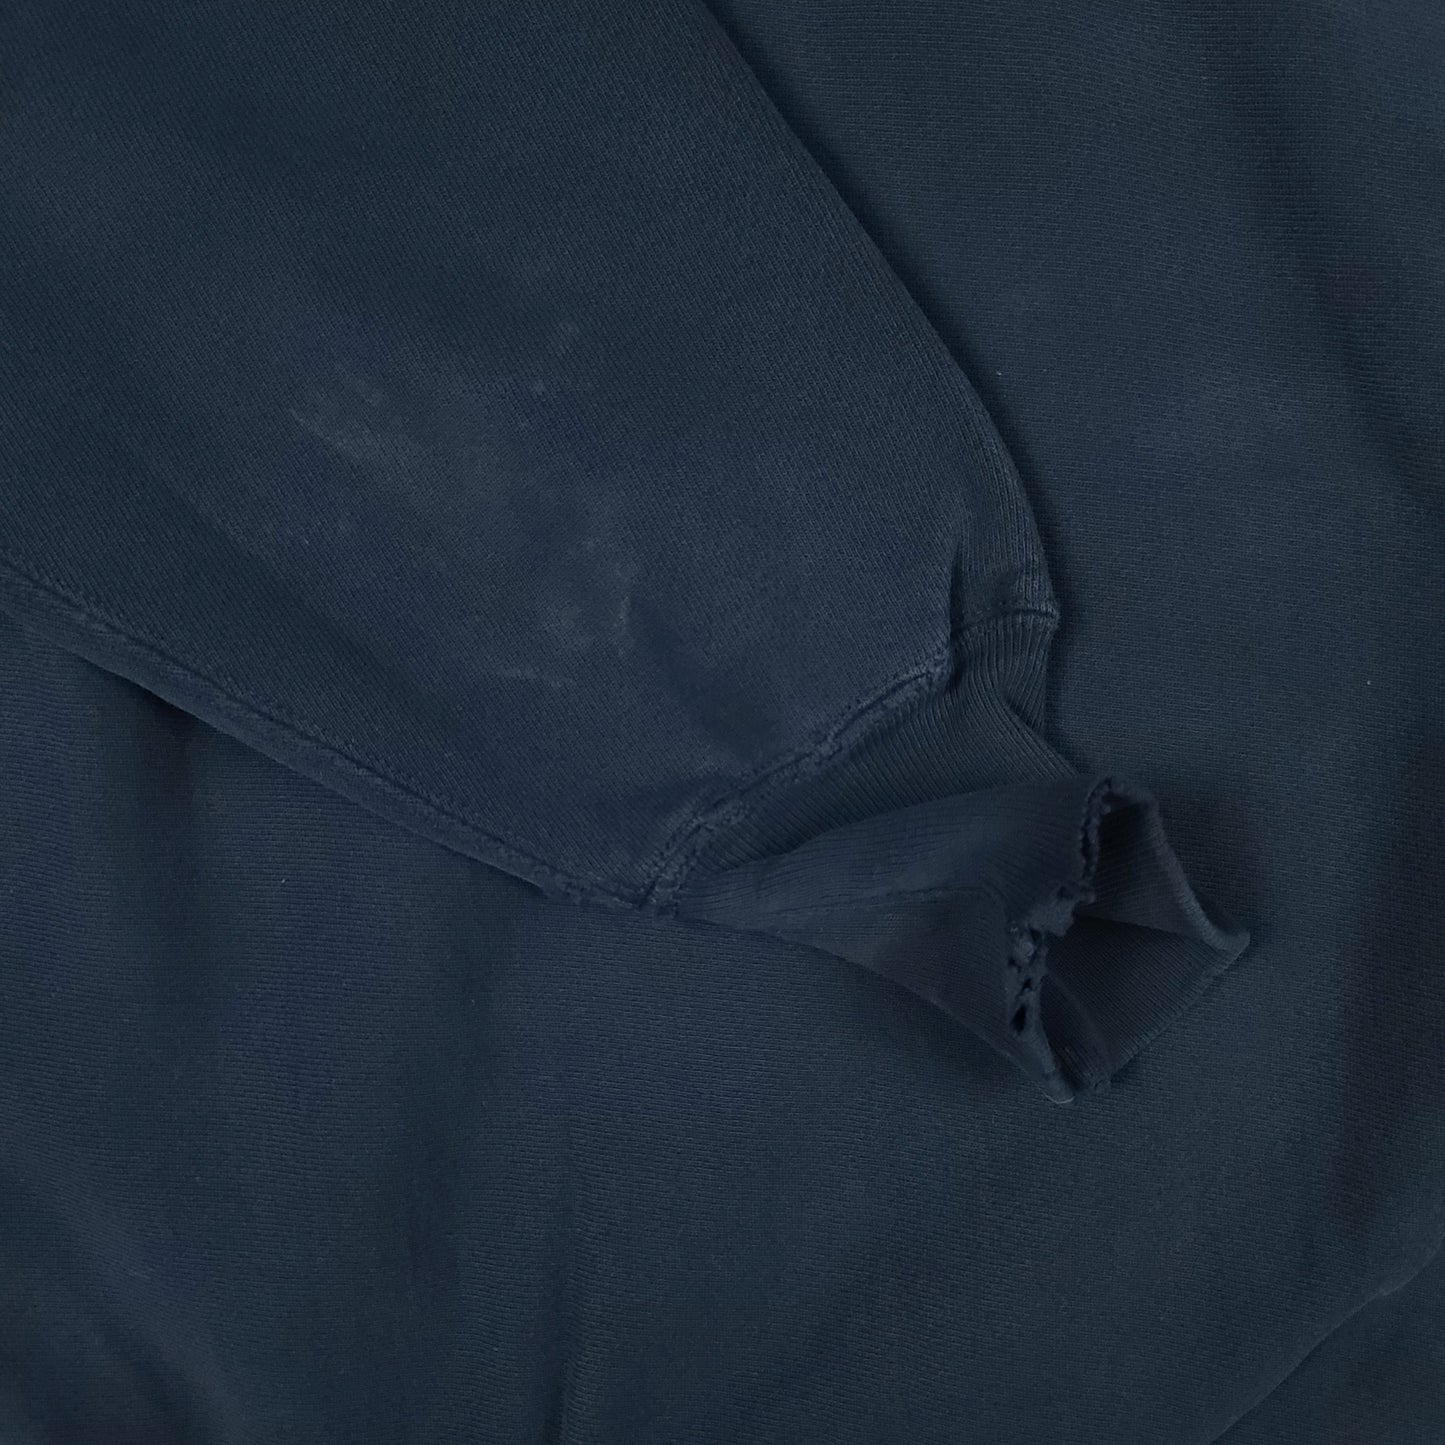 Vintage Clemson University Navy Blue Champion Reverse Weave Sweatshirt (Cut Neck)